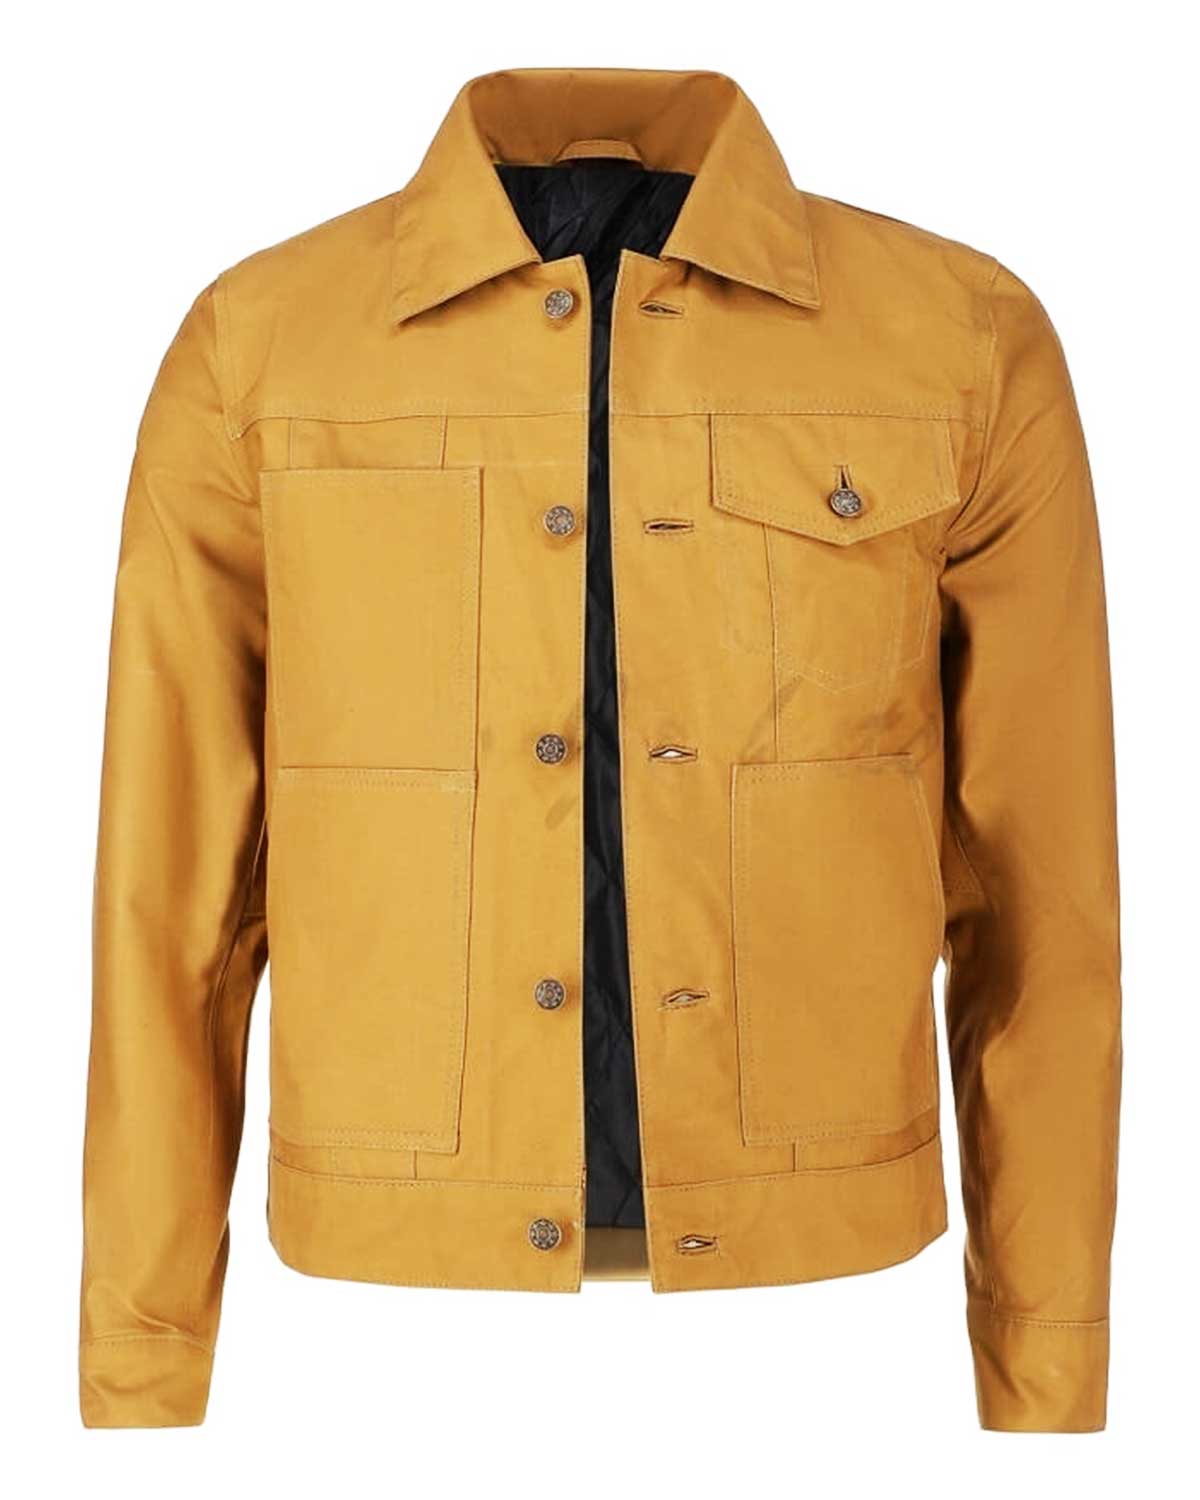 Yellowstone Cole Hauser Rip Wheeler Yellow Jacket | Elite Jacket